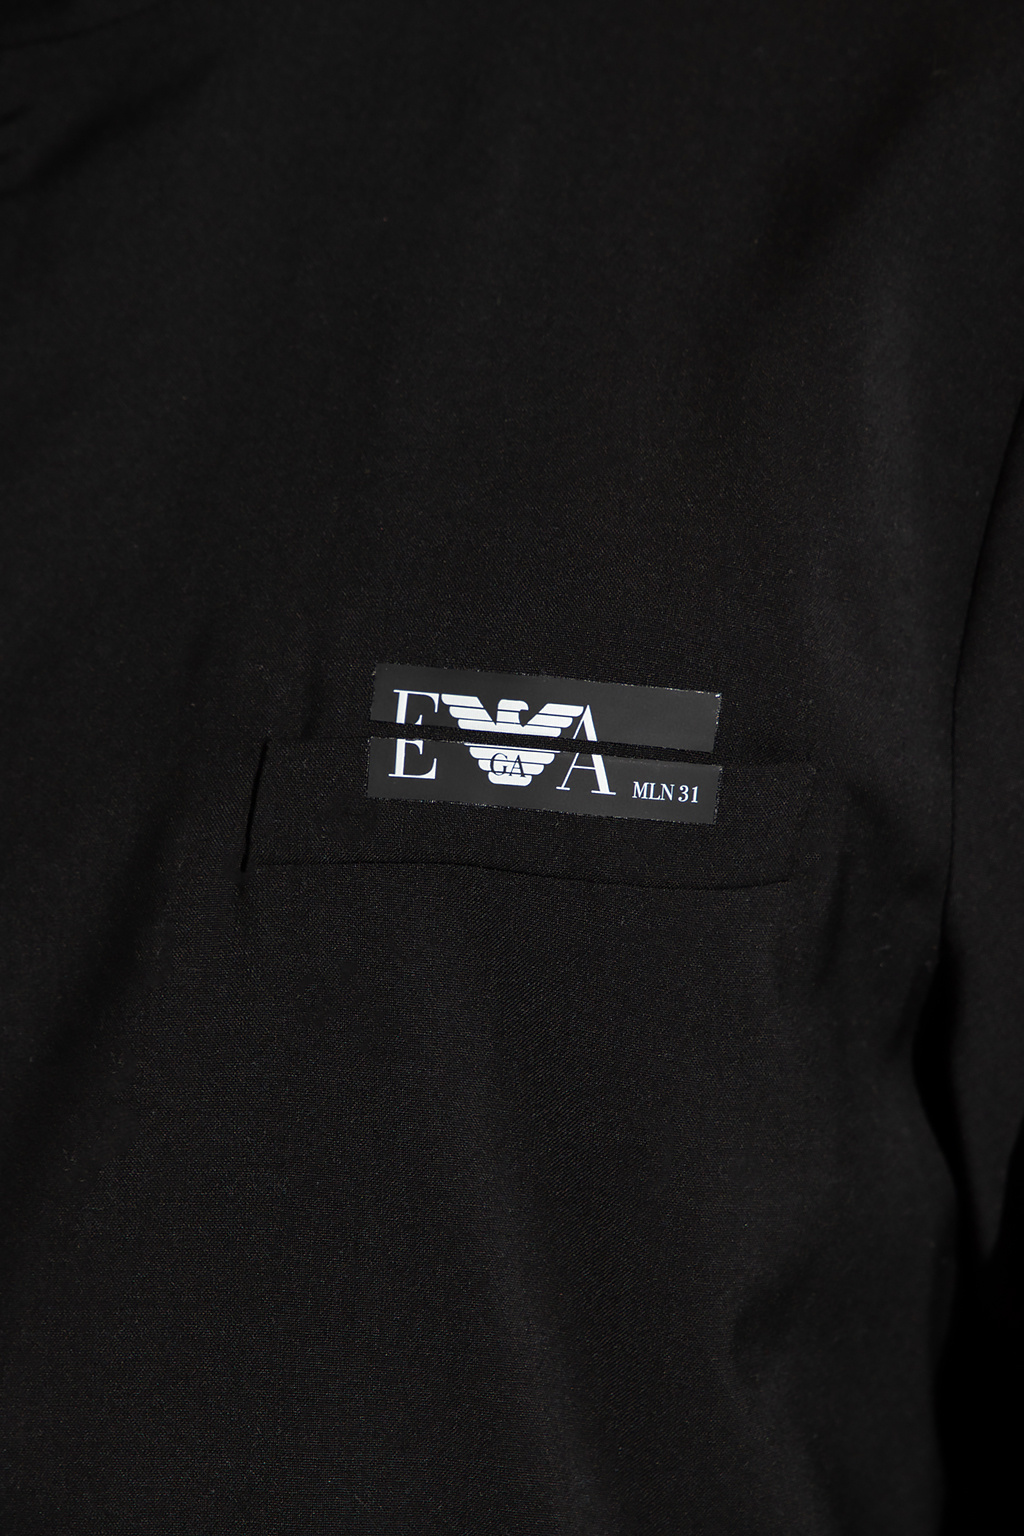 zitten naar voren gebracht hulp Giorgio Armani panelled low-top sneakers Marrone - InteragencyboardShops  Austria - Black Jacket with logo Emporio Armani